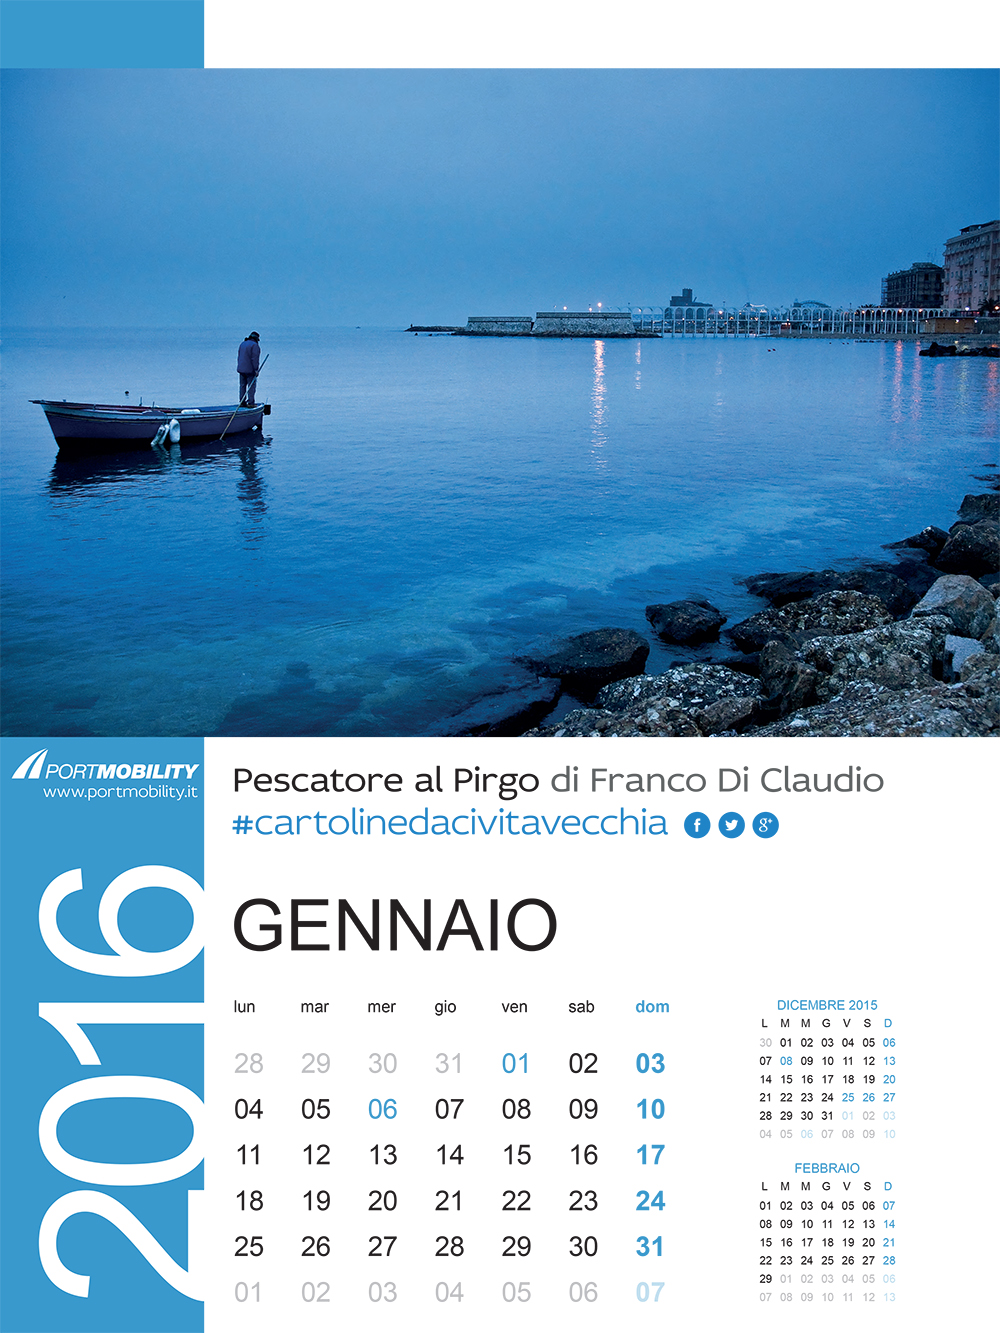 Month of January of #postcardsfromcivitavecchia